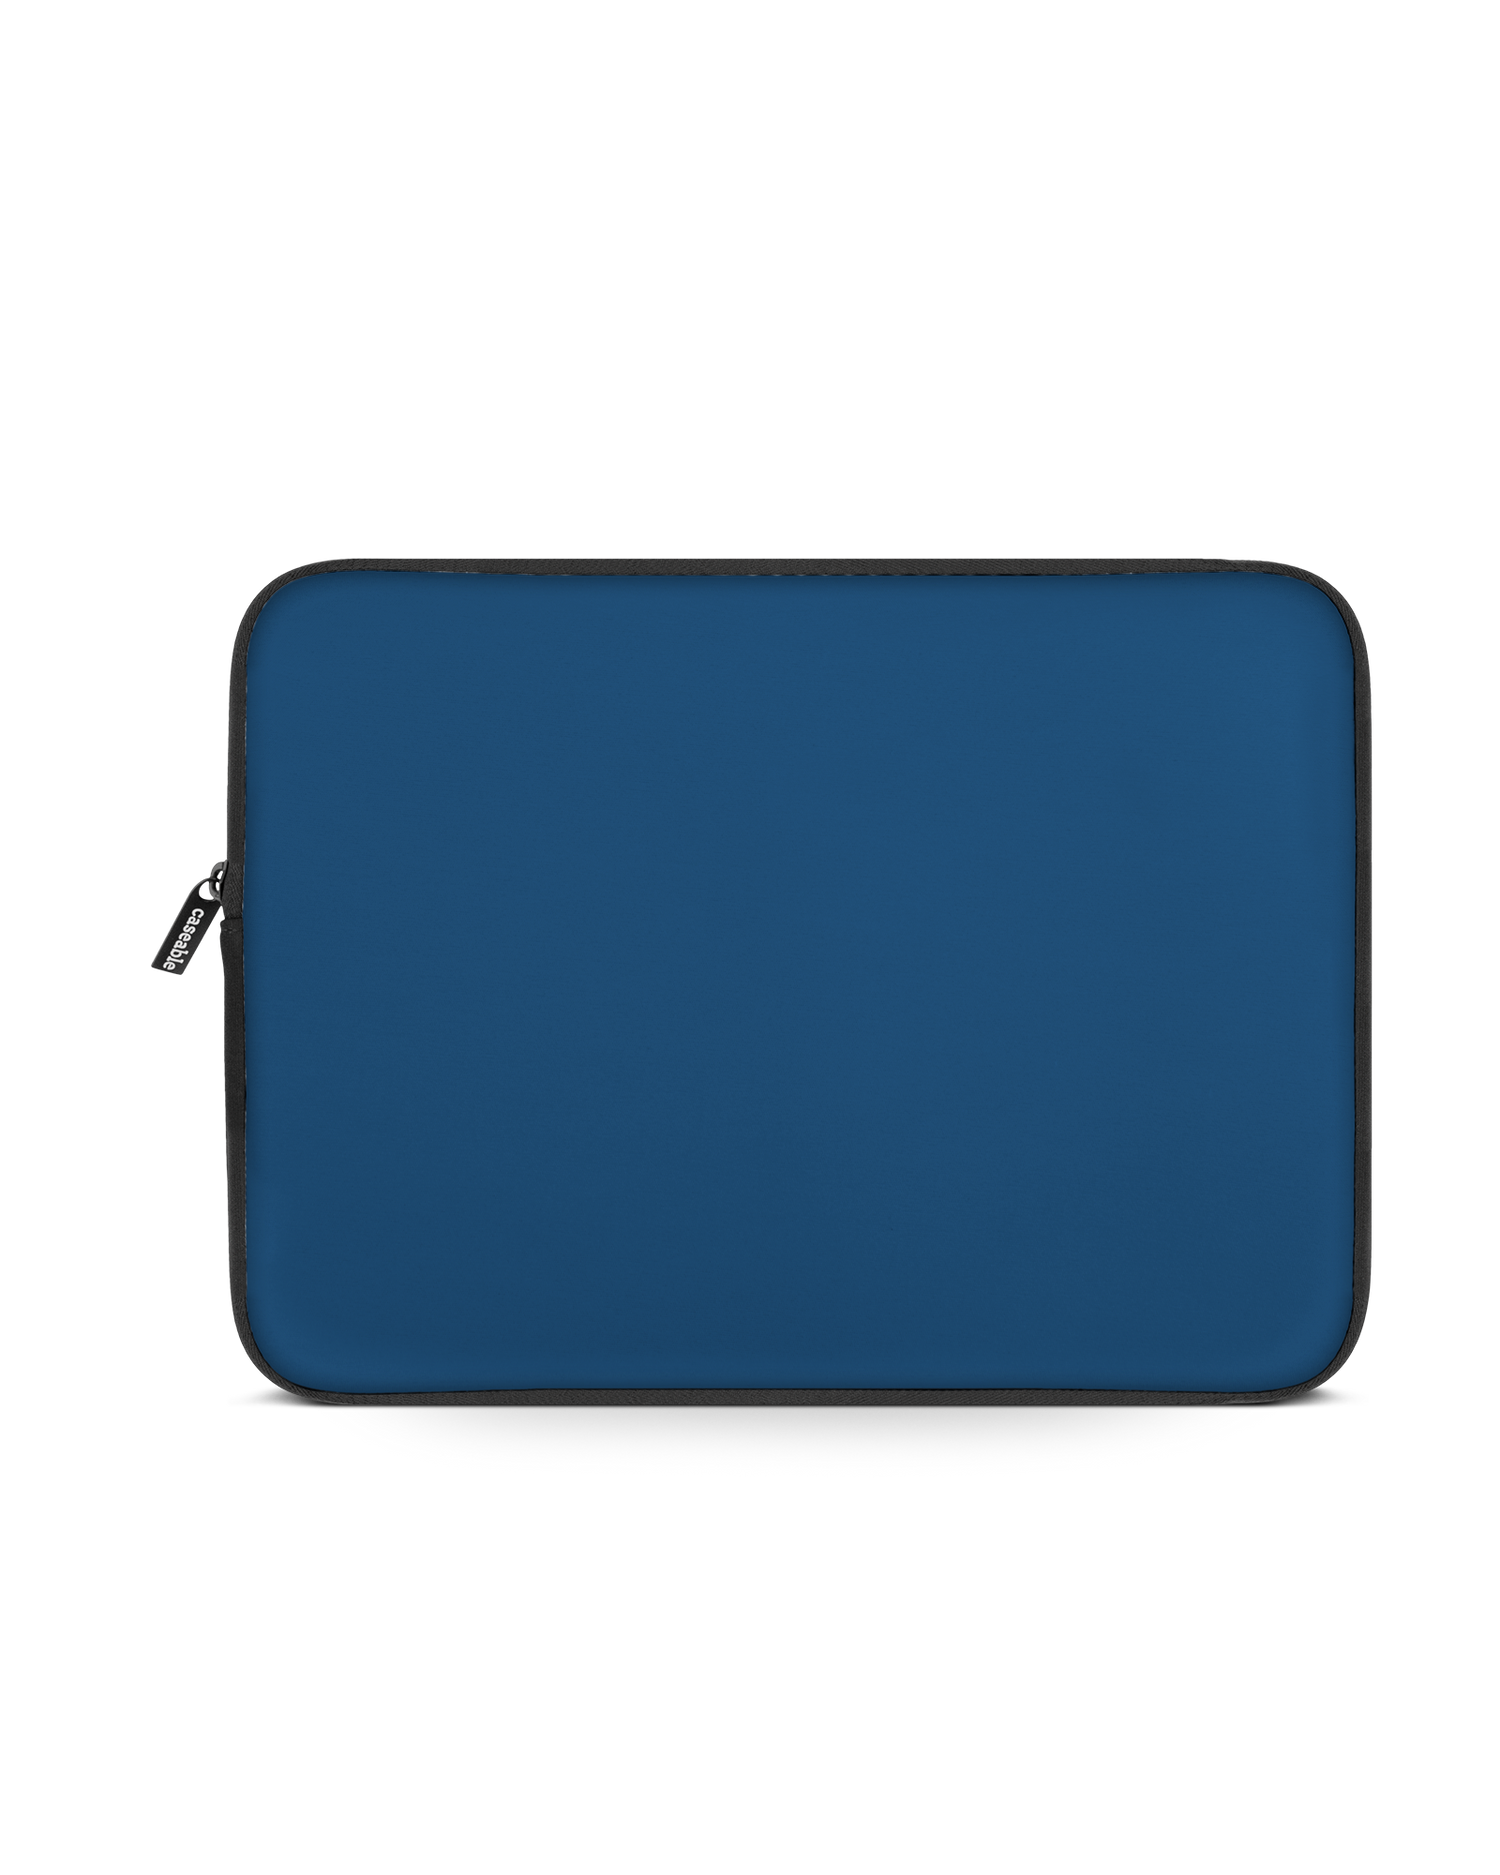 CLASSIC BLUE Laptop Case 13 inch: Front View